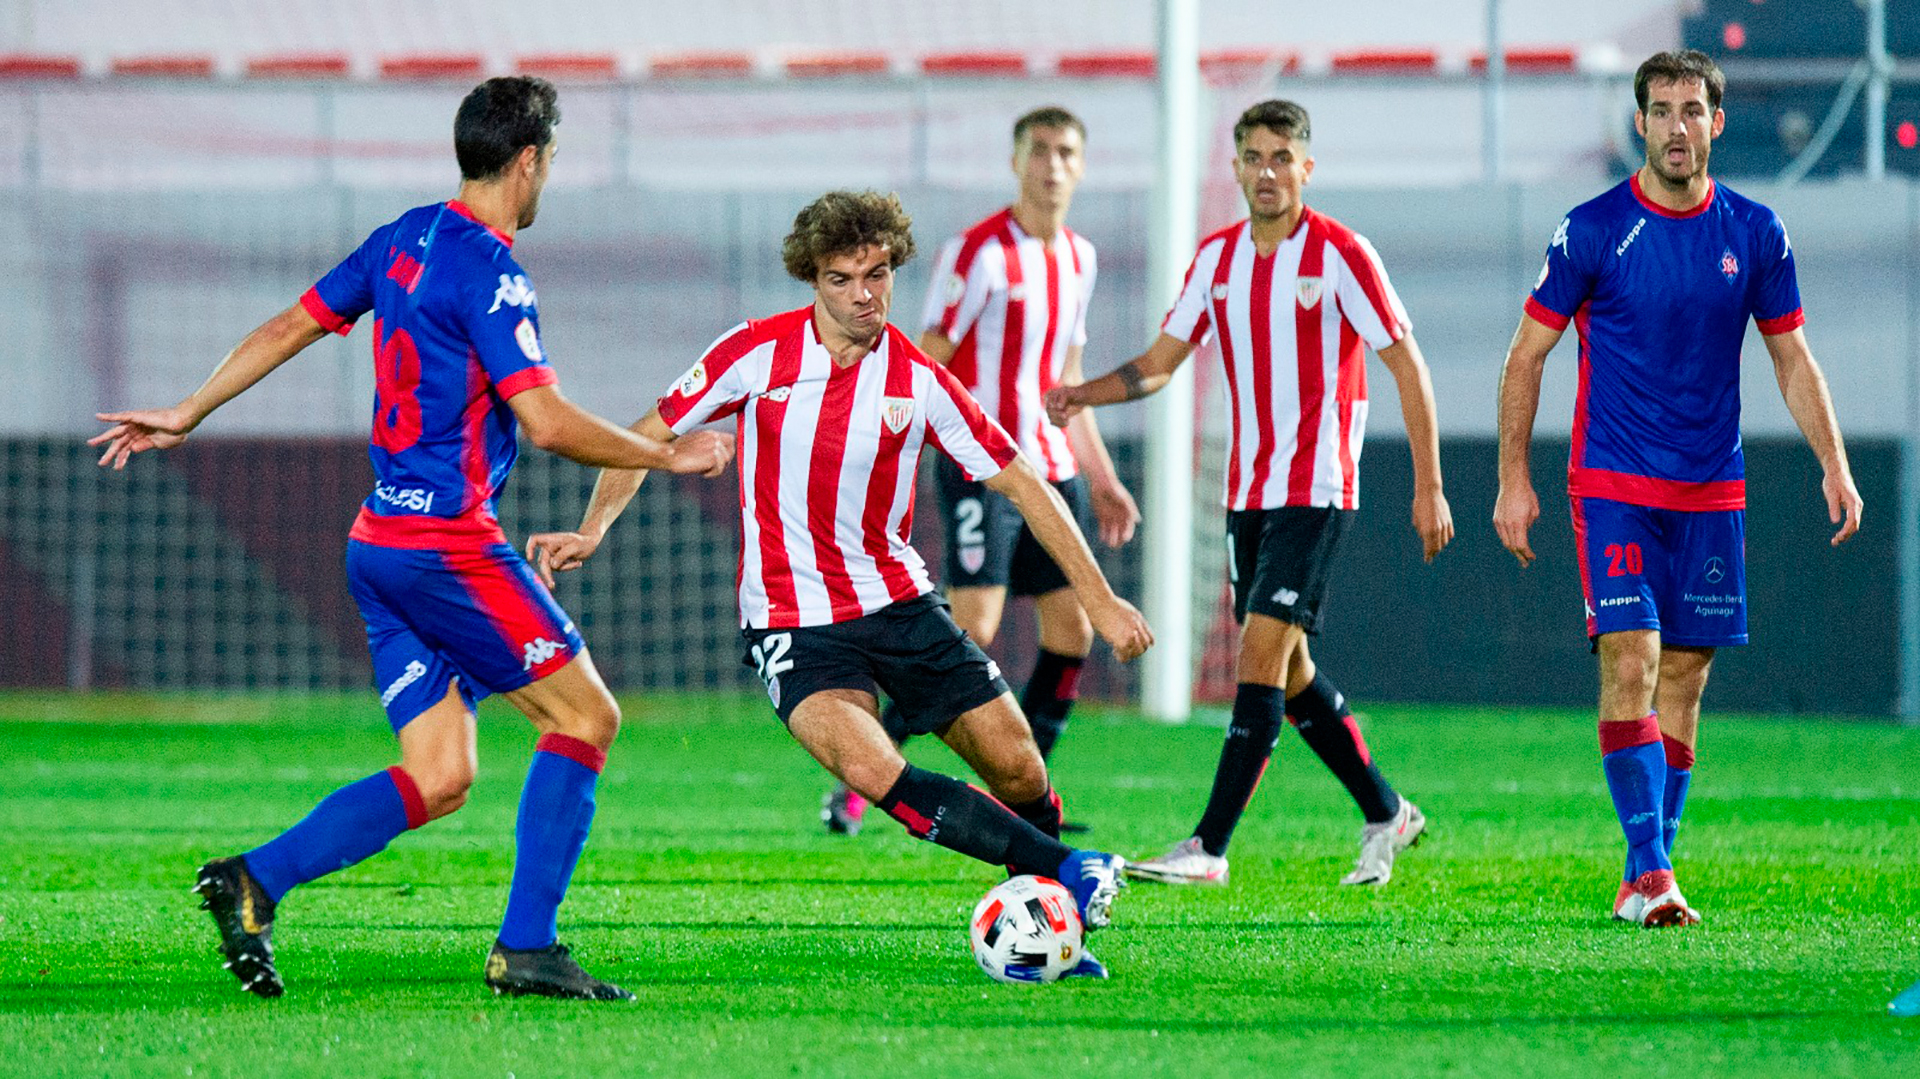 Bilbao athletic vs amorebieta